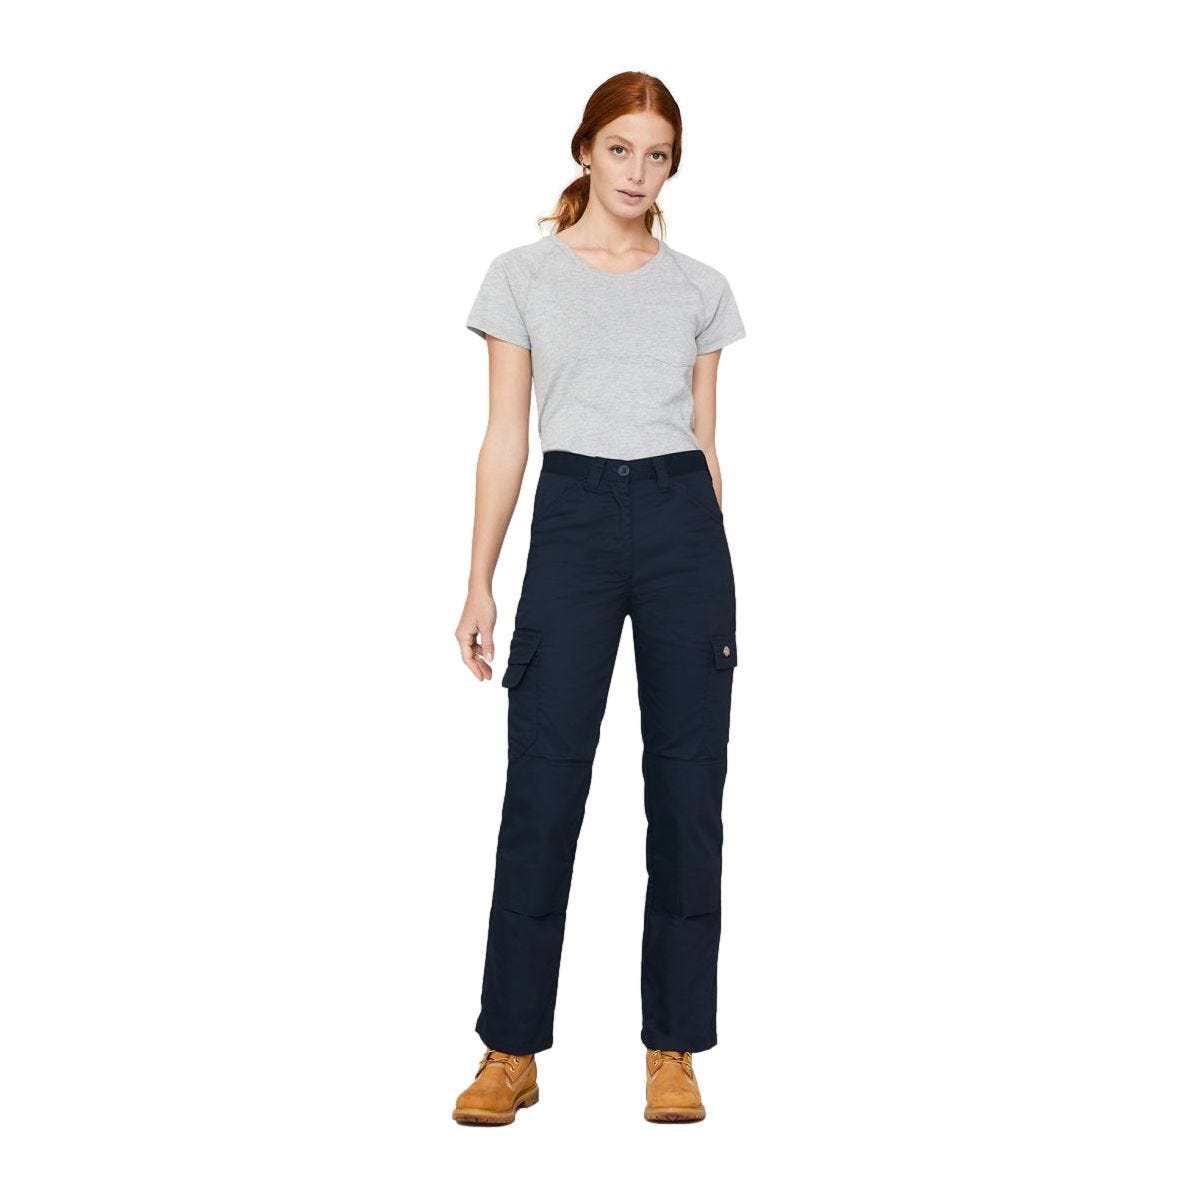 Pantalon Everyday Flex femme Bleu marine - Dickies - Taille 38 4